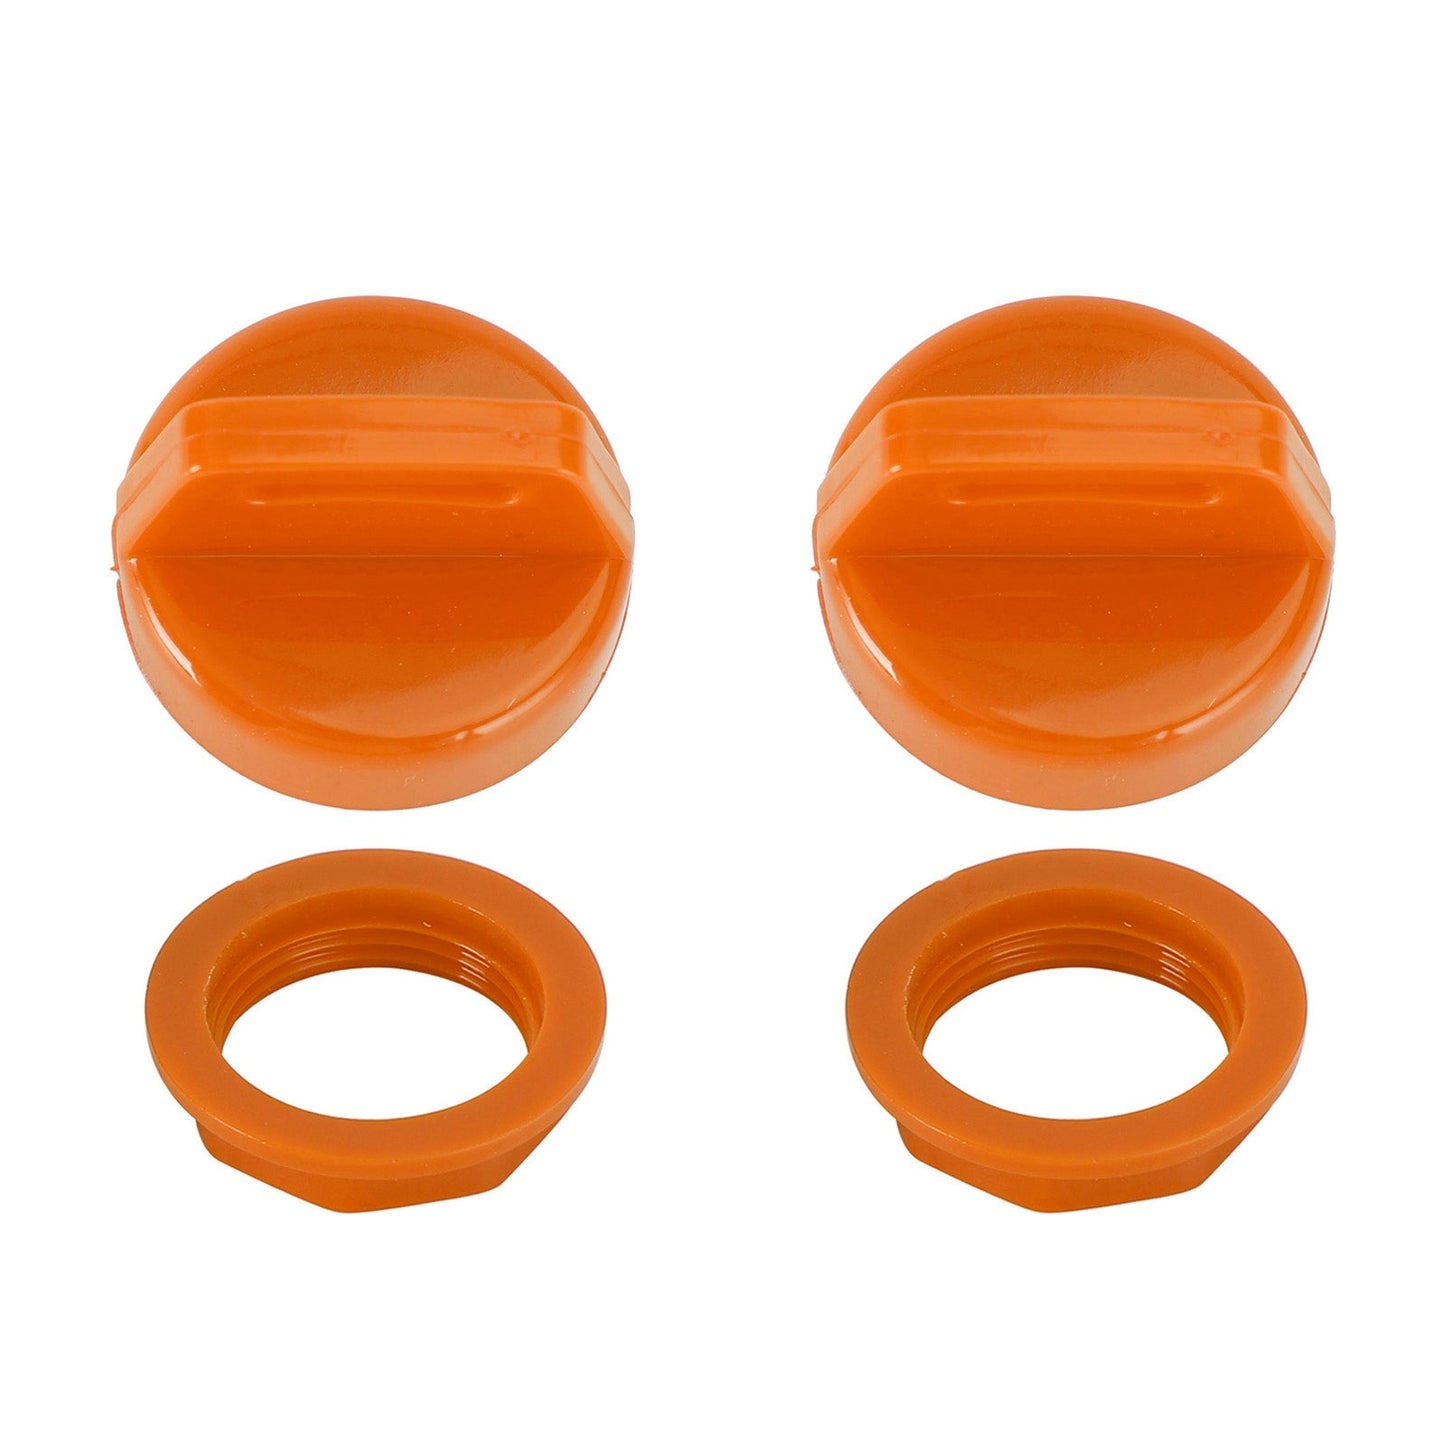 2PCS Orange Ignition Key Cover w/Nut For Polaris RZR XP 570 800 900 1000 5433534